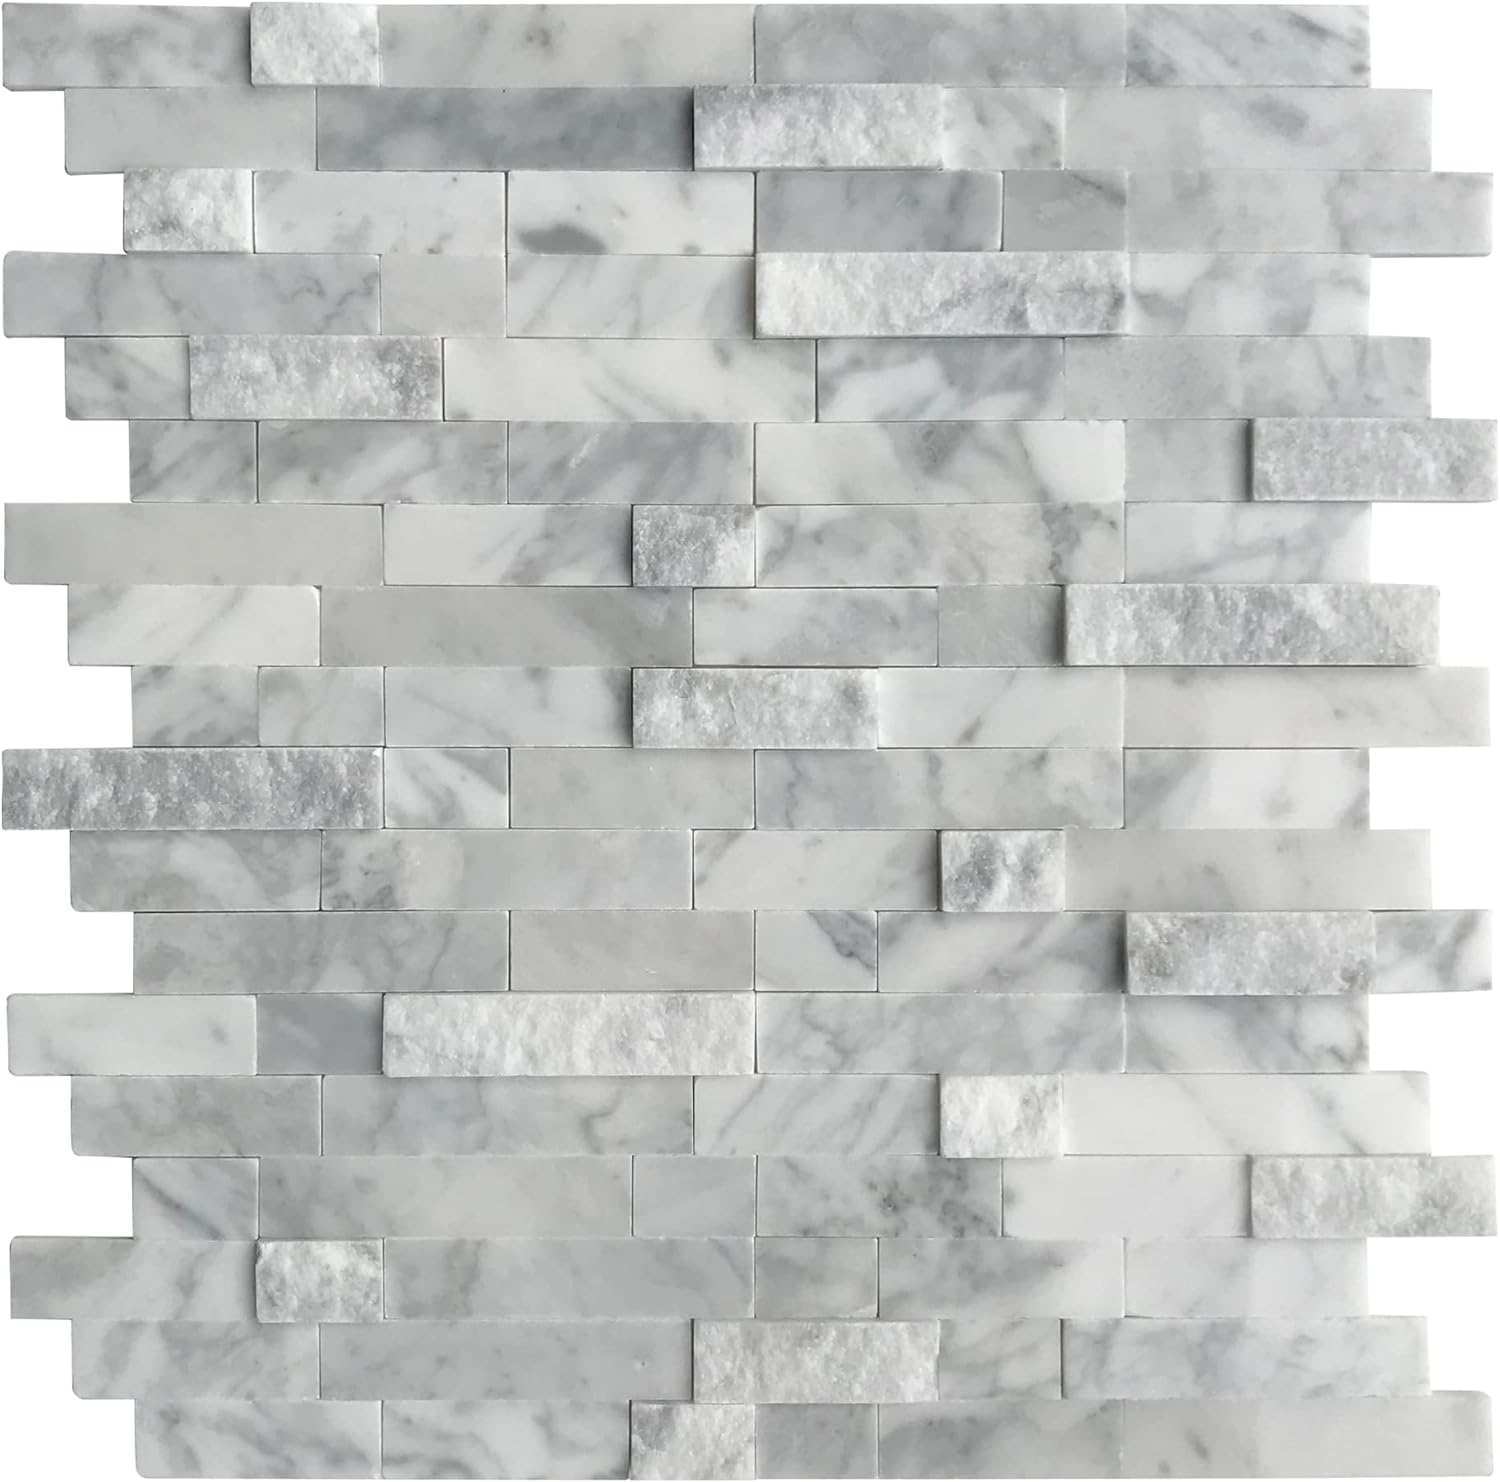 SUNWINGS Peel and Stick Mosaic Natural 3D Stone Self Adhesive Tiles, 12" x 11" 5-Sheet Stick on Backsplash for Kitche